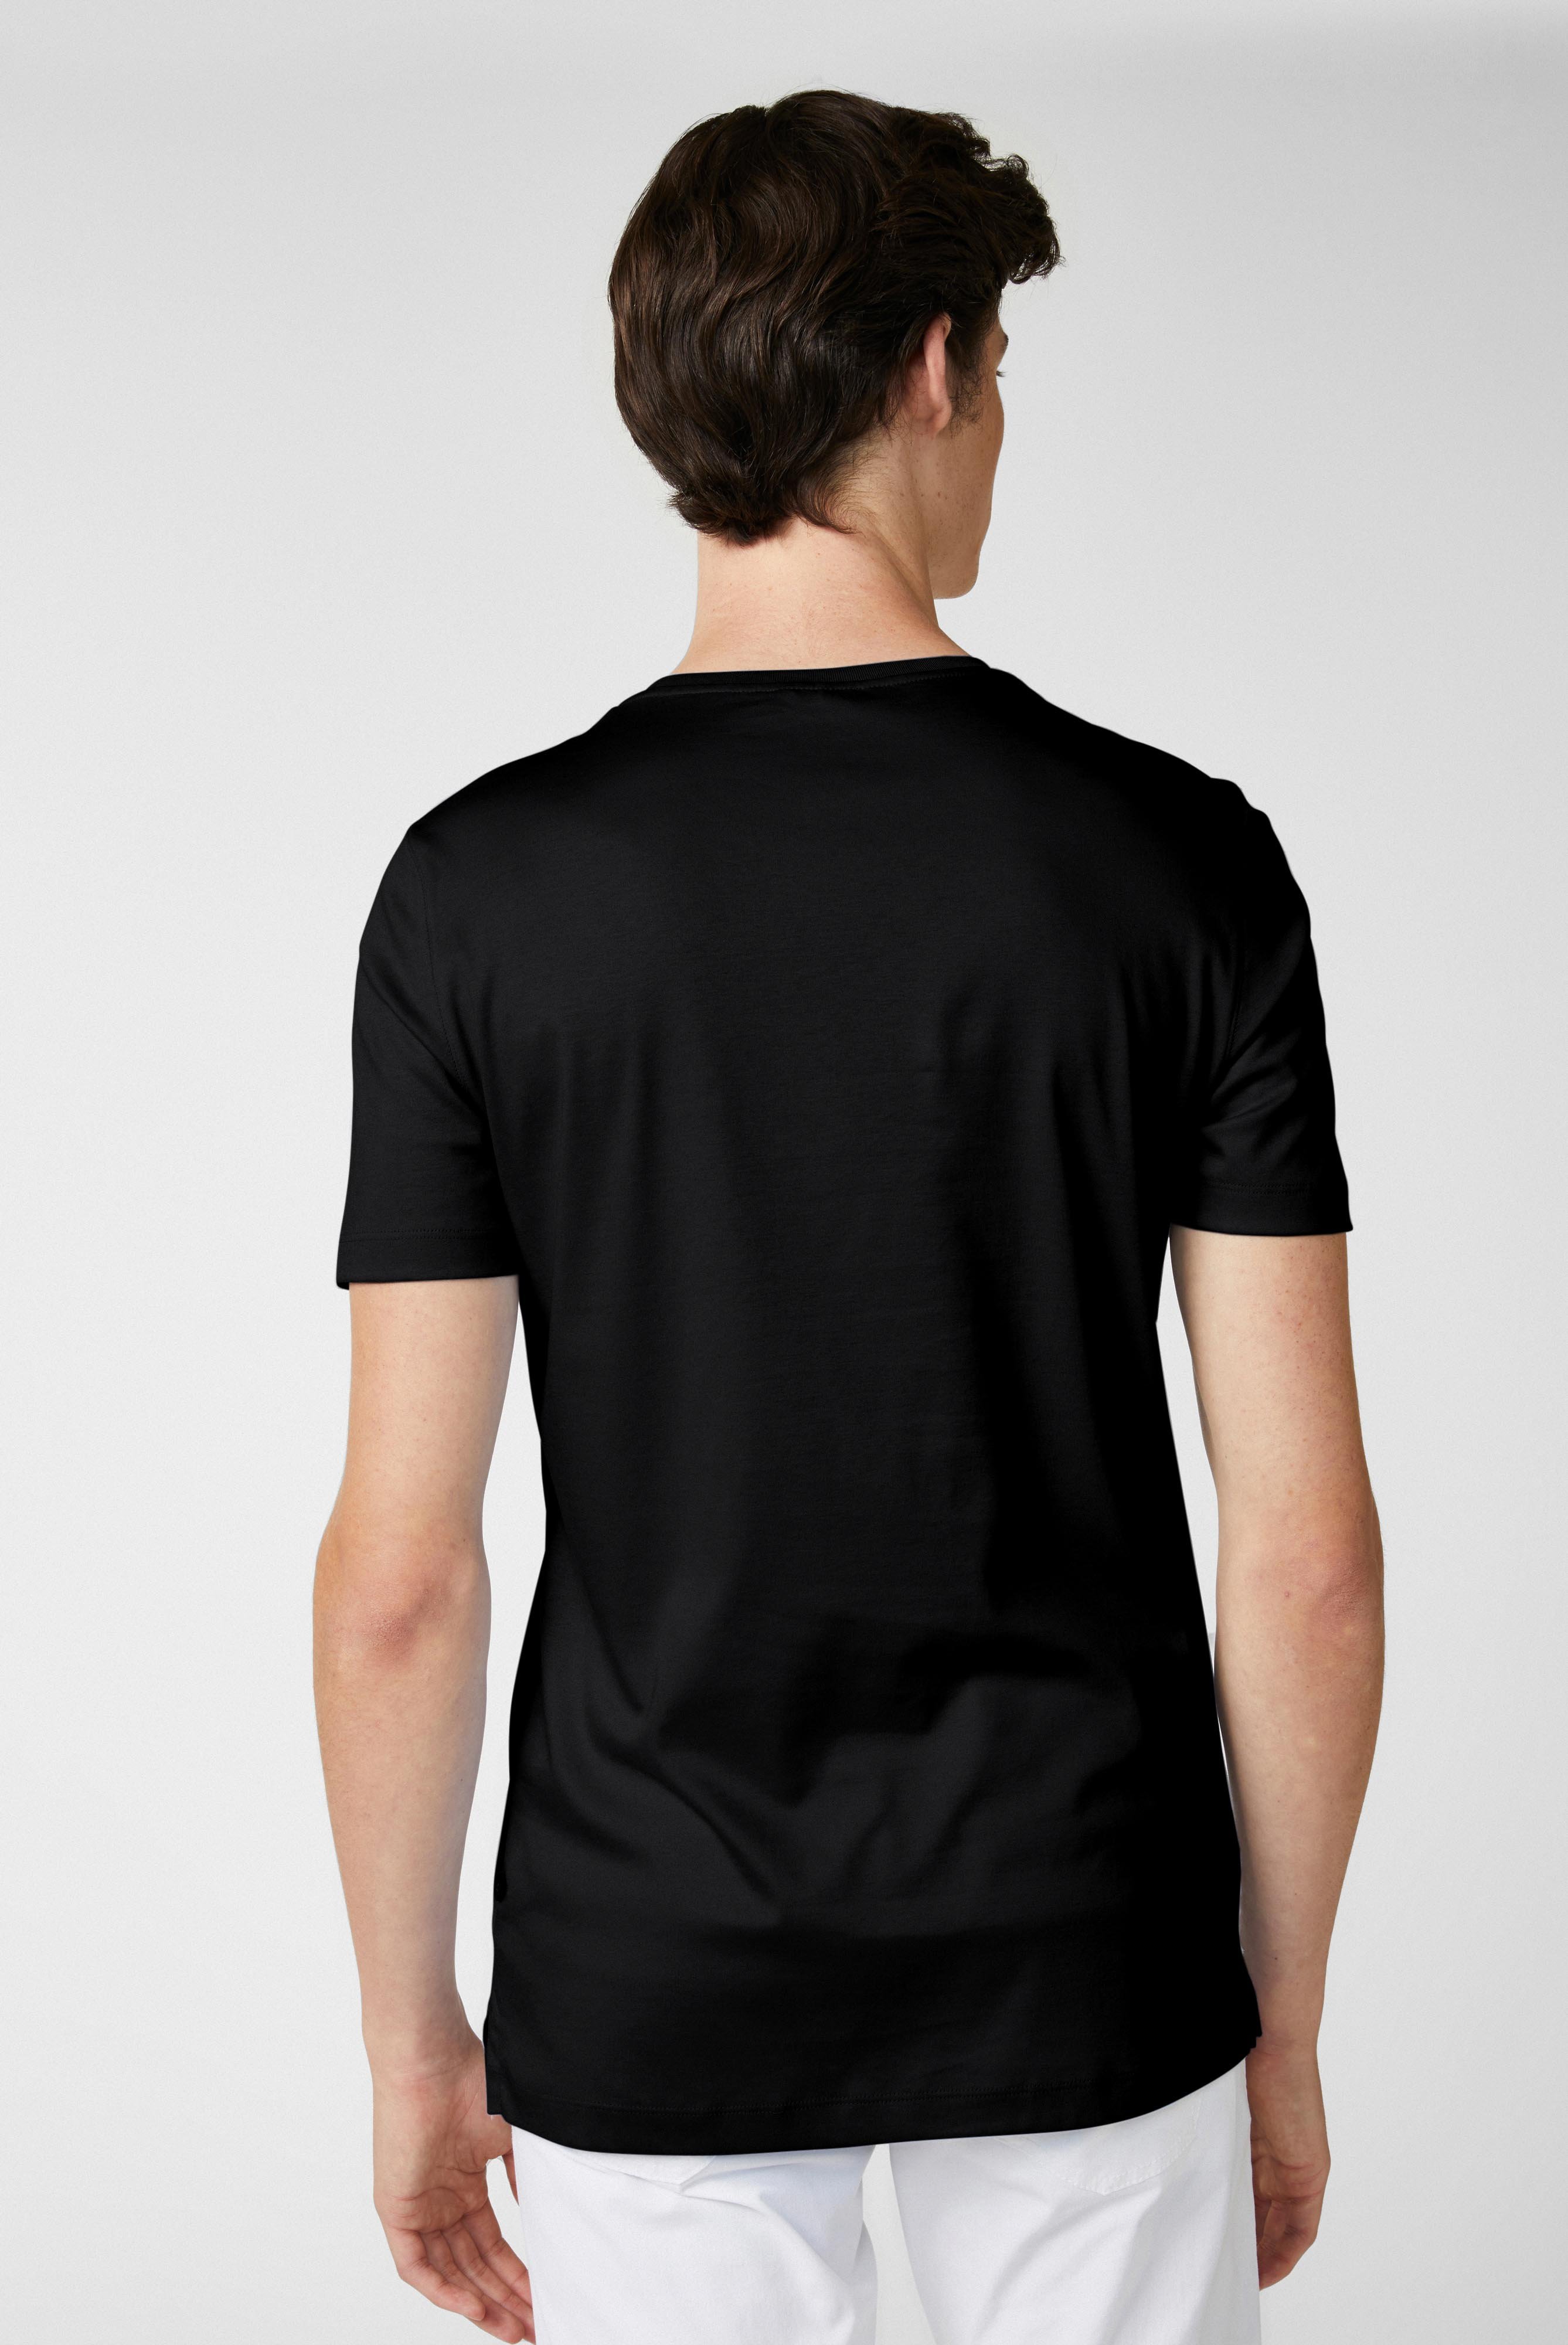 T-Shirts+Swiss Cotton Jersey Crew Neck T-Shirt+20.1717.UX.180031.099.L